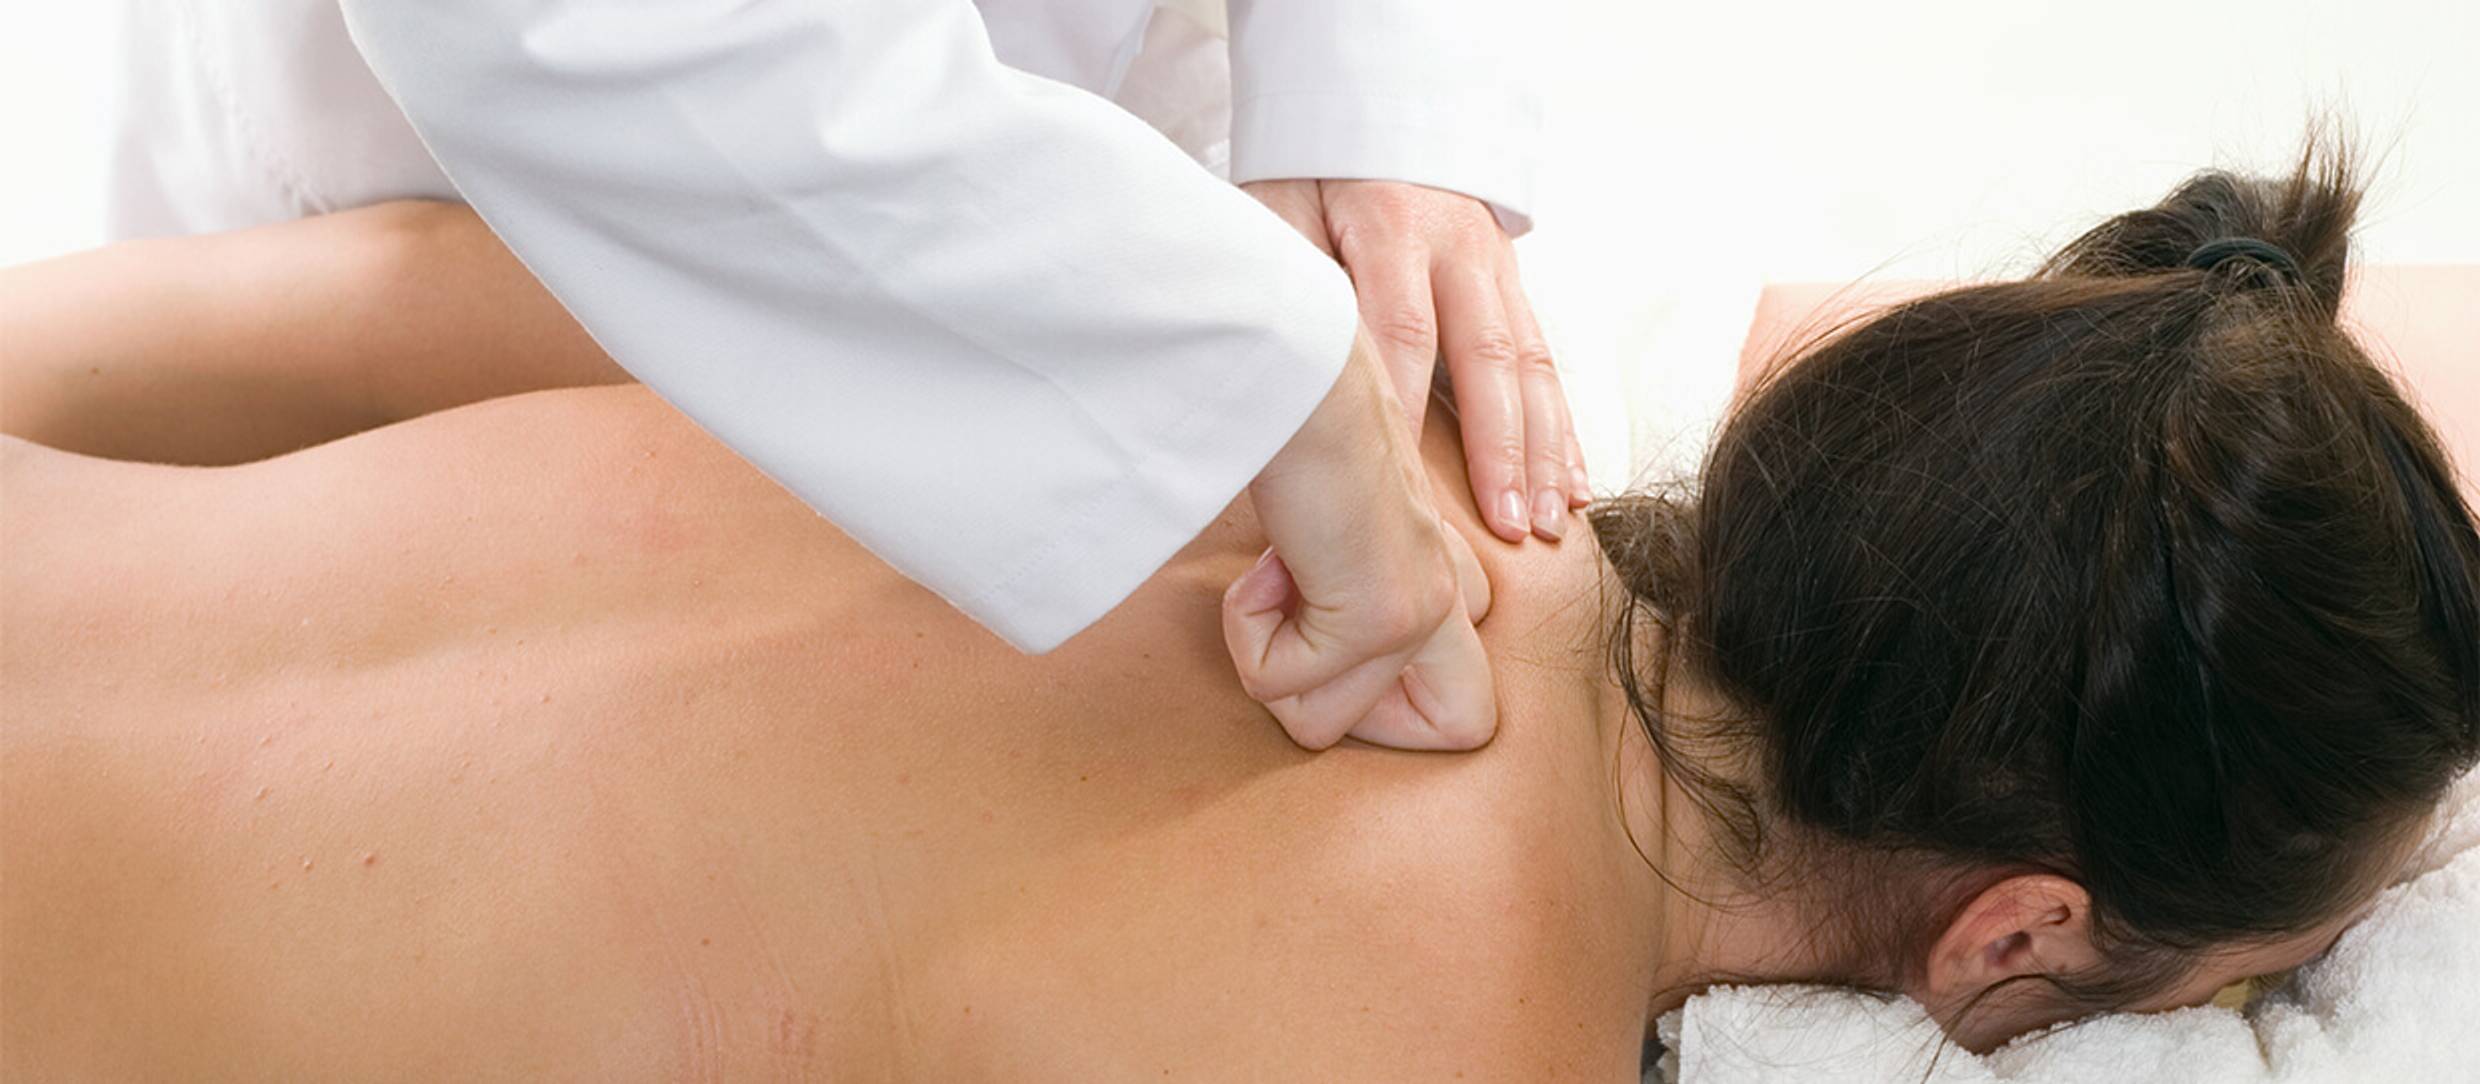 Applying the petrissage technique to a female massage client